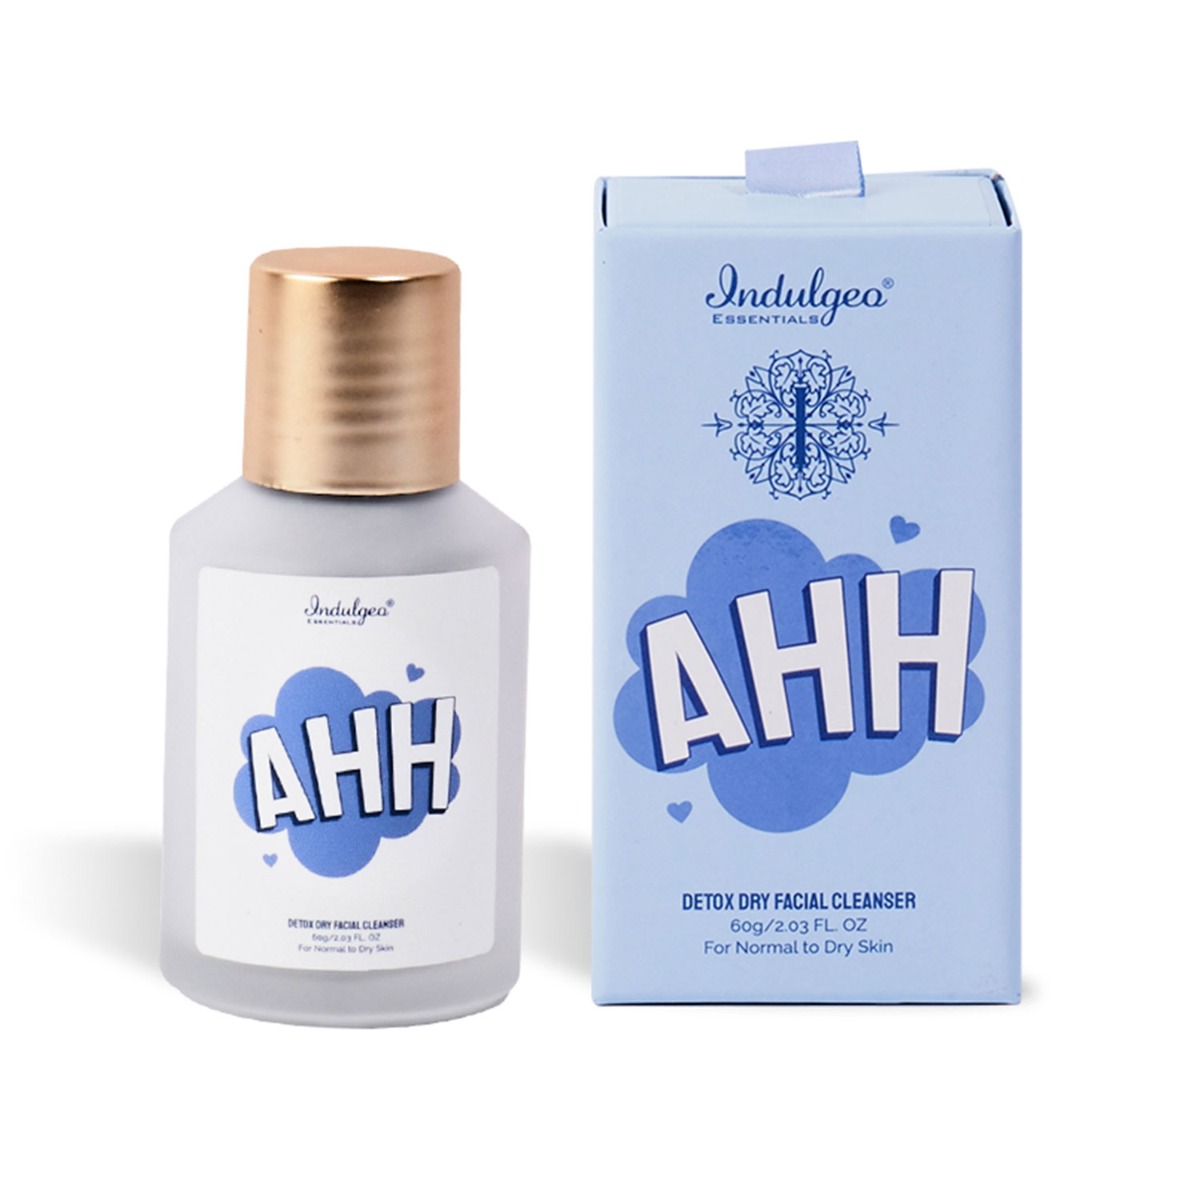 Indulgeo essentials AHH Detox Dry Facial Cleanser, 60gm